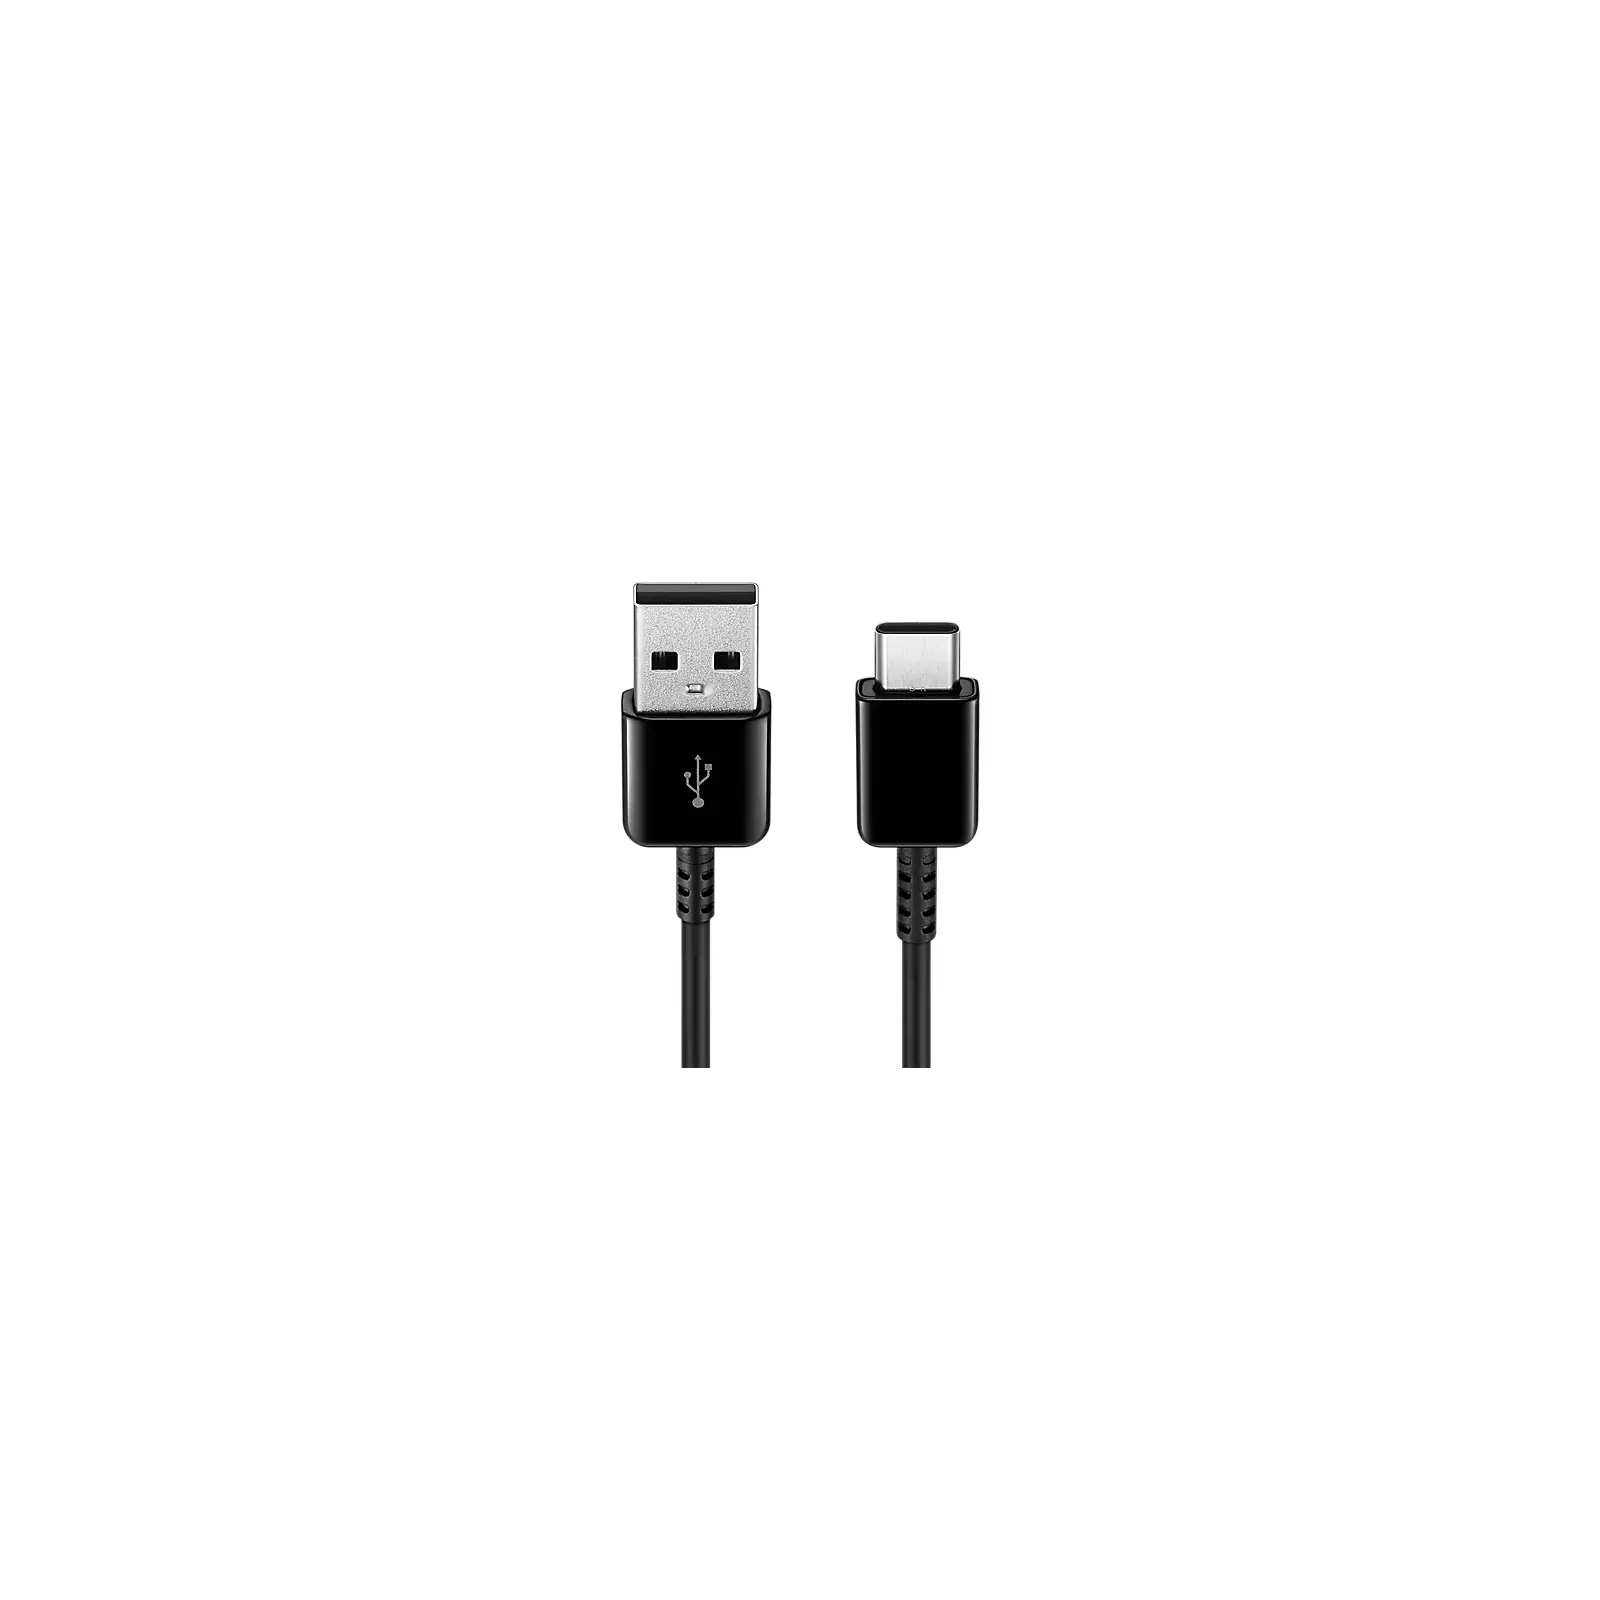 Samsung EP-DG930 1.5m USB A USB C Male Male Black USB Cable